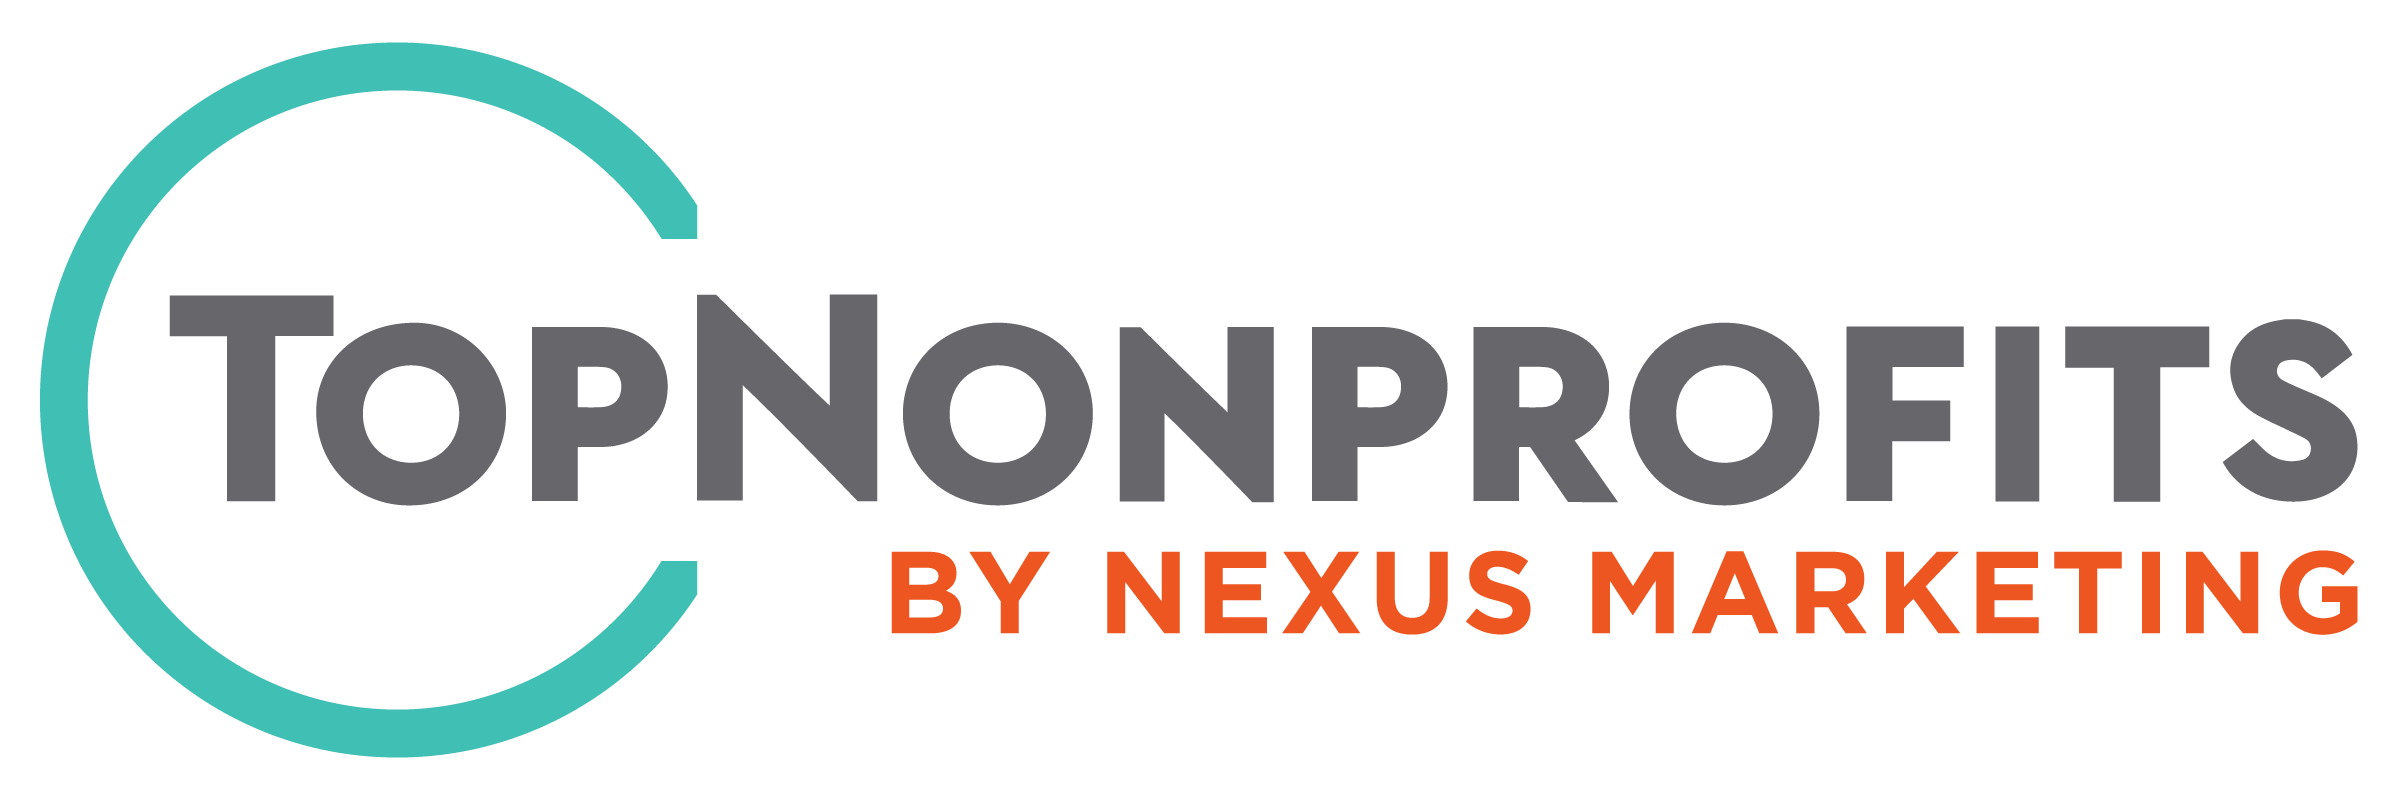 Top Nonprofits by Nexus Marketing Logo